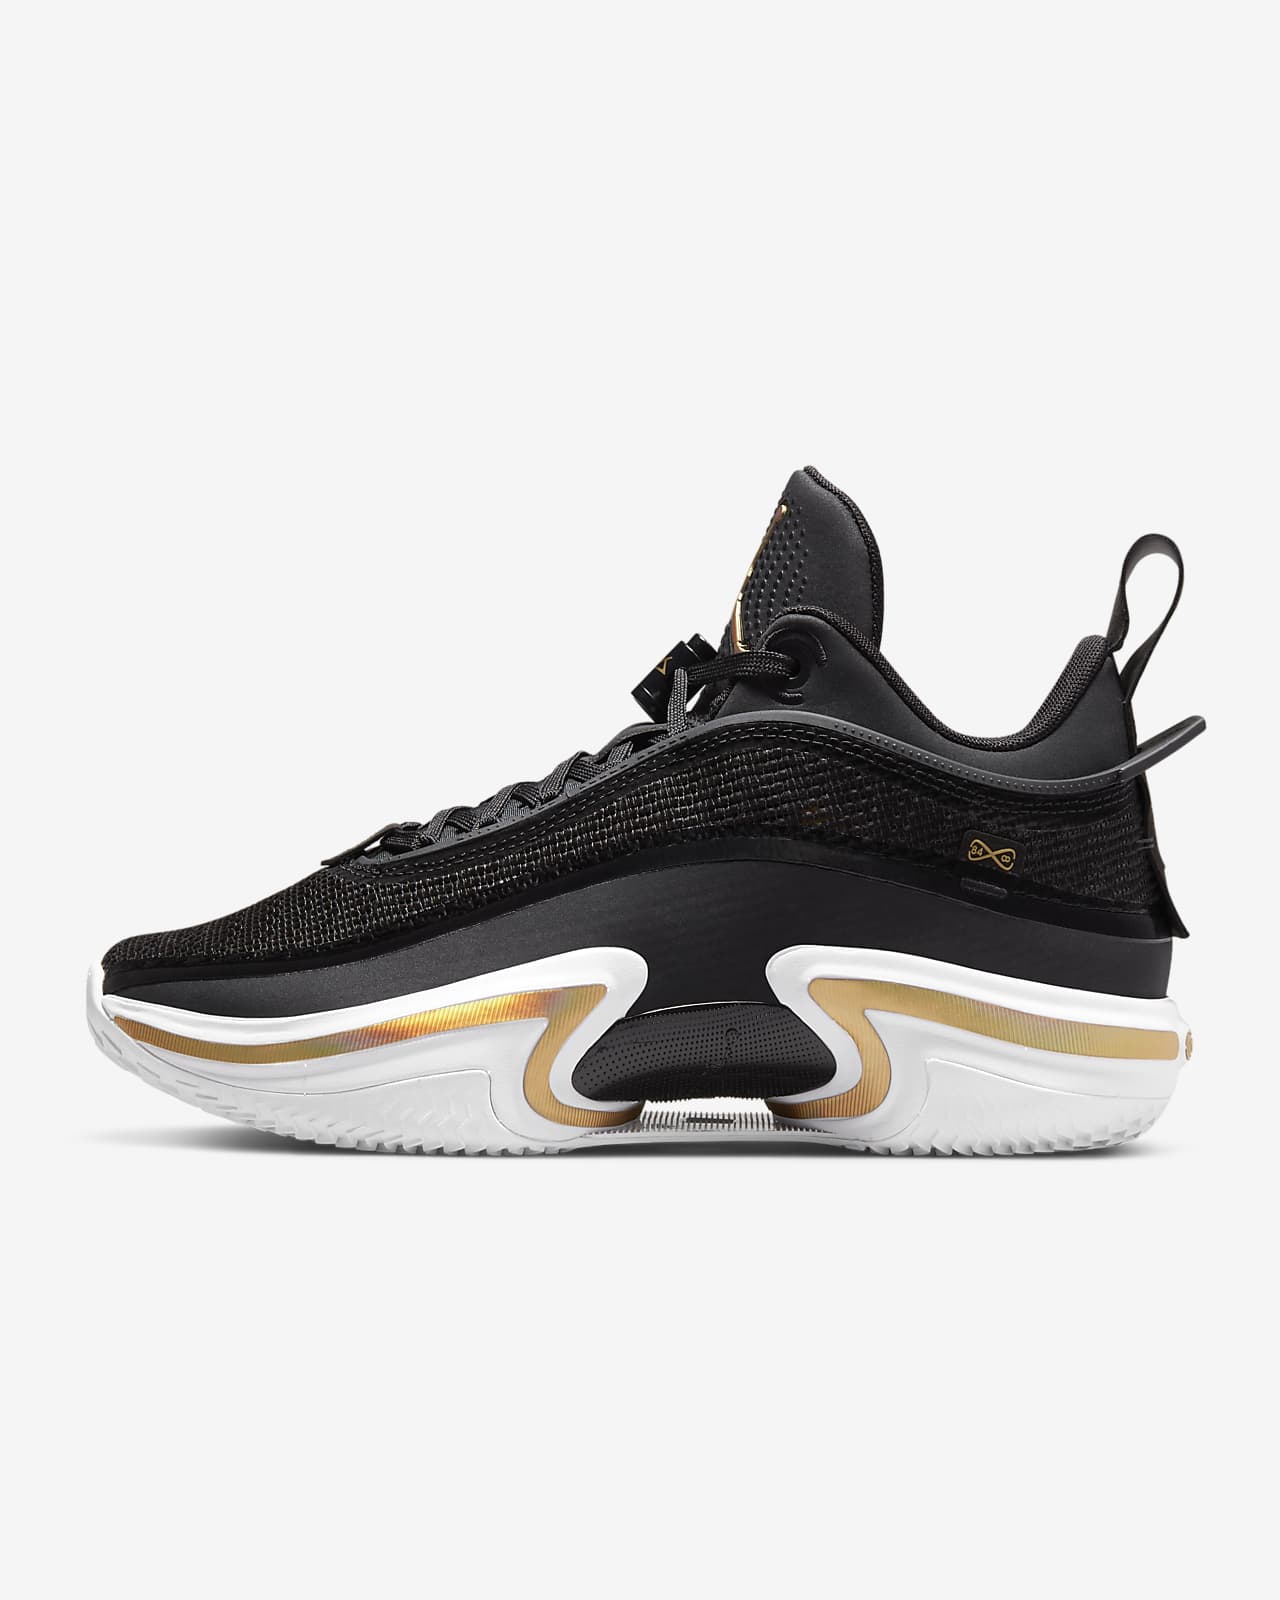 Air Jordan XXXVI Low PF Men's Basketball Shoes